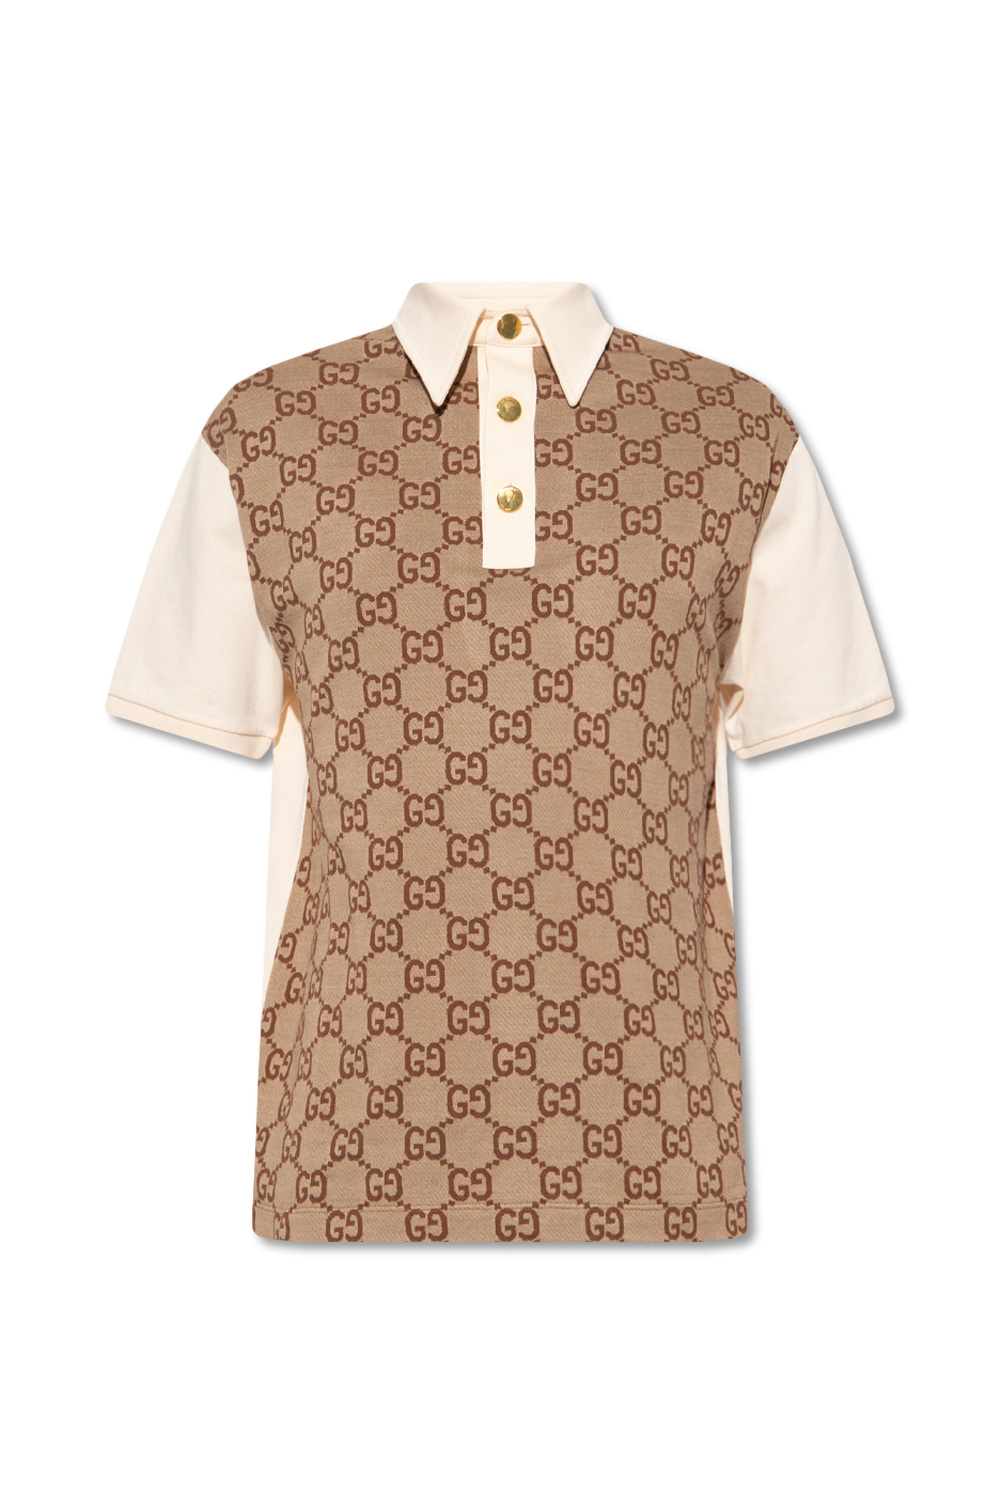 Gucci Polo shirt with monogram, Men's Clothing, JmksportShops